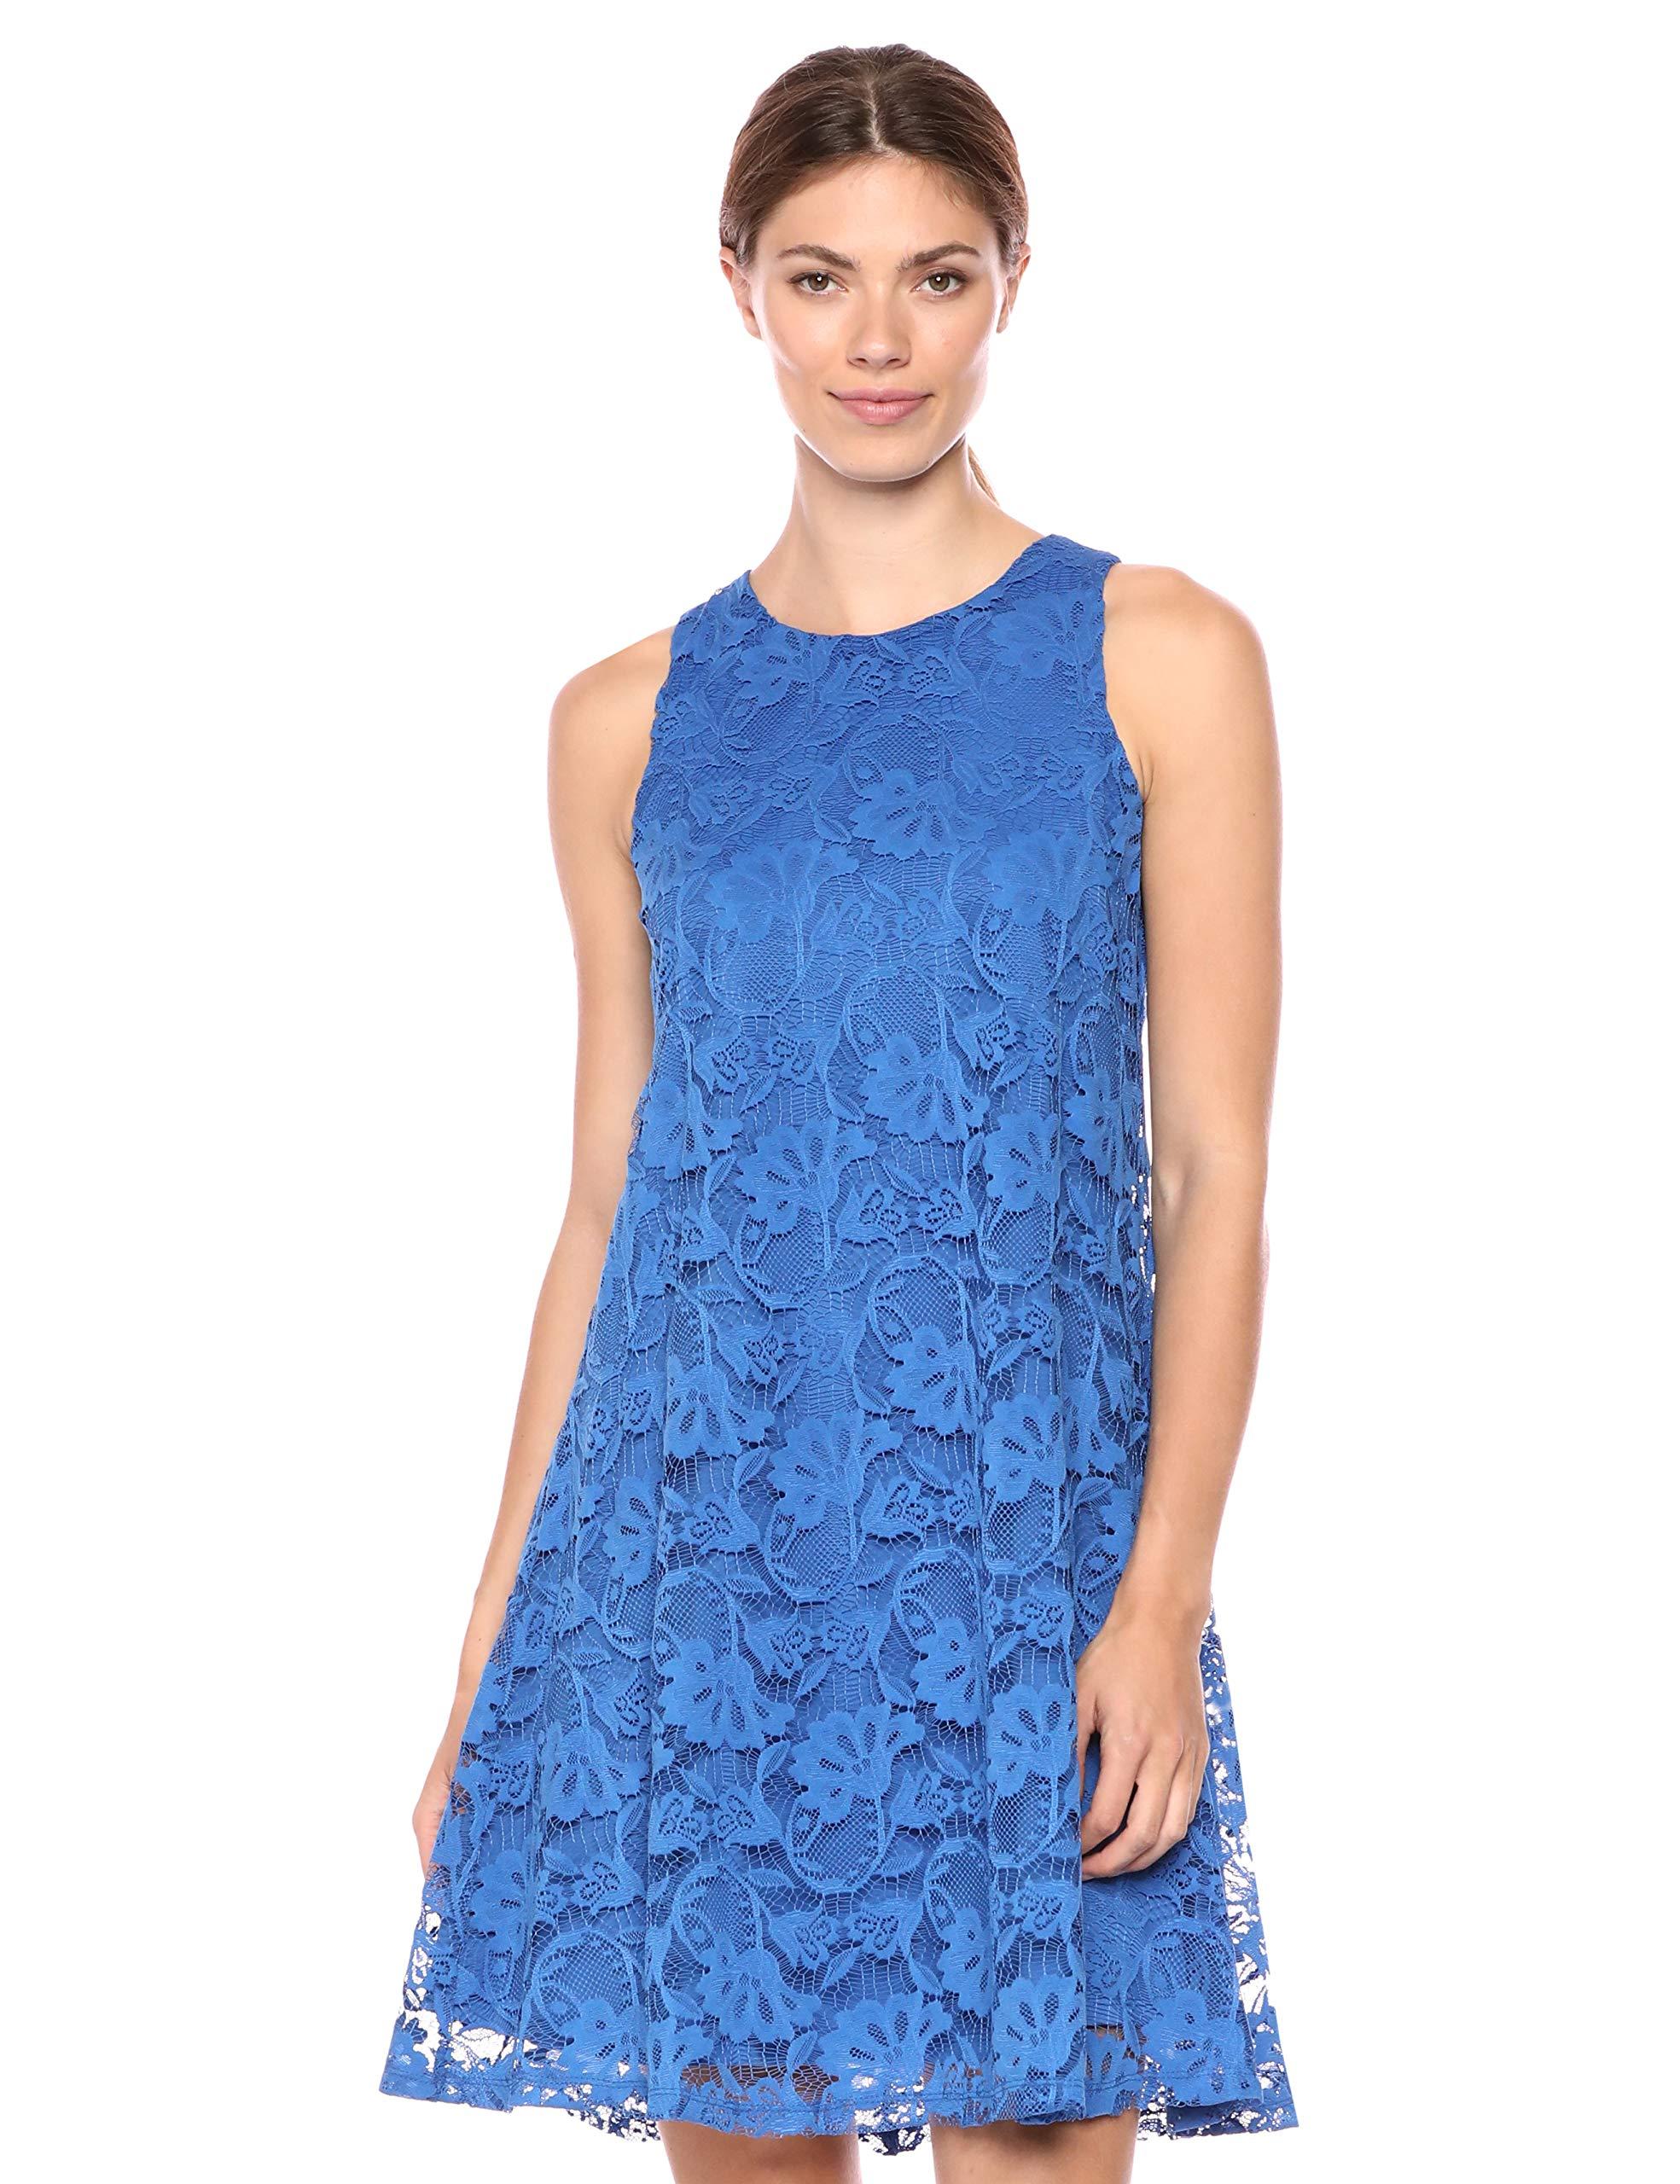 Nine West Sleeveless Lace Trapeze Dress in Blue - Lyst